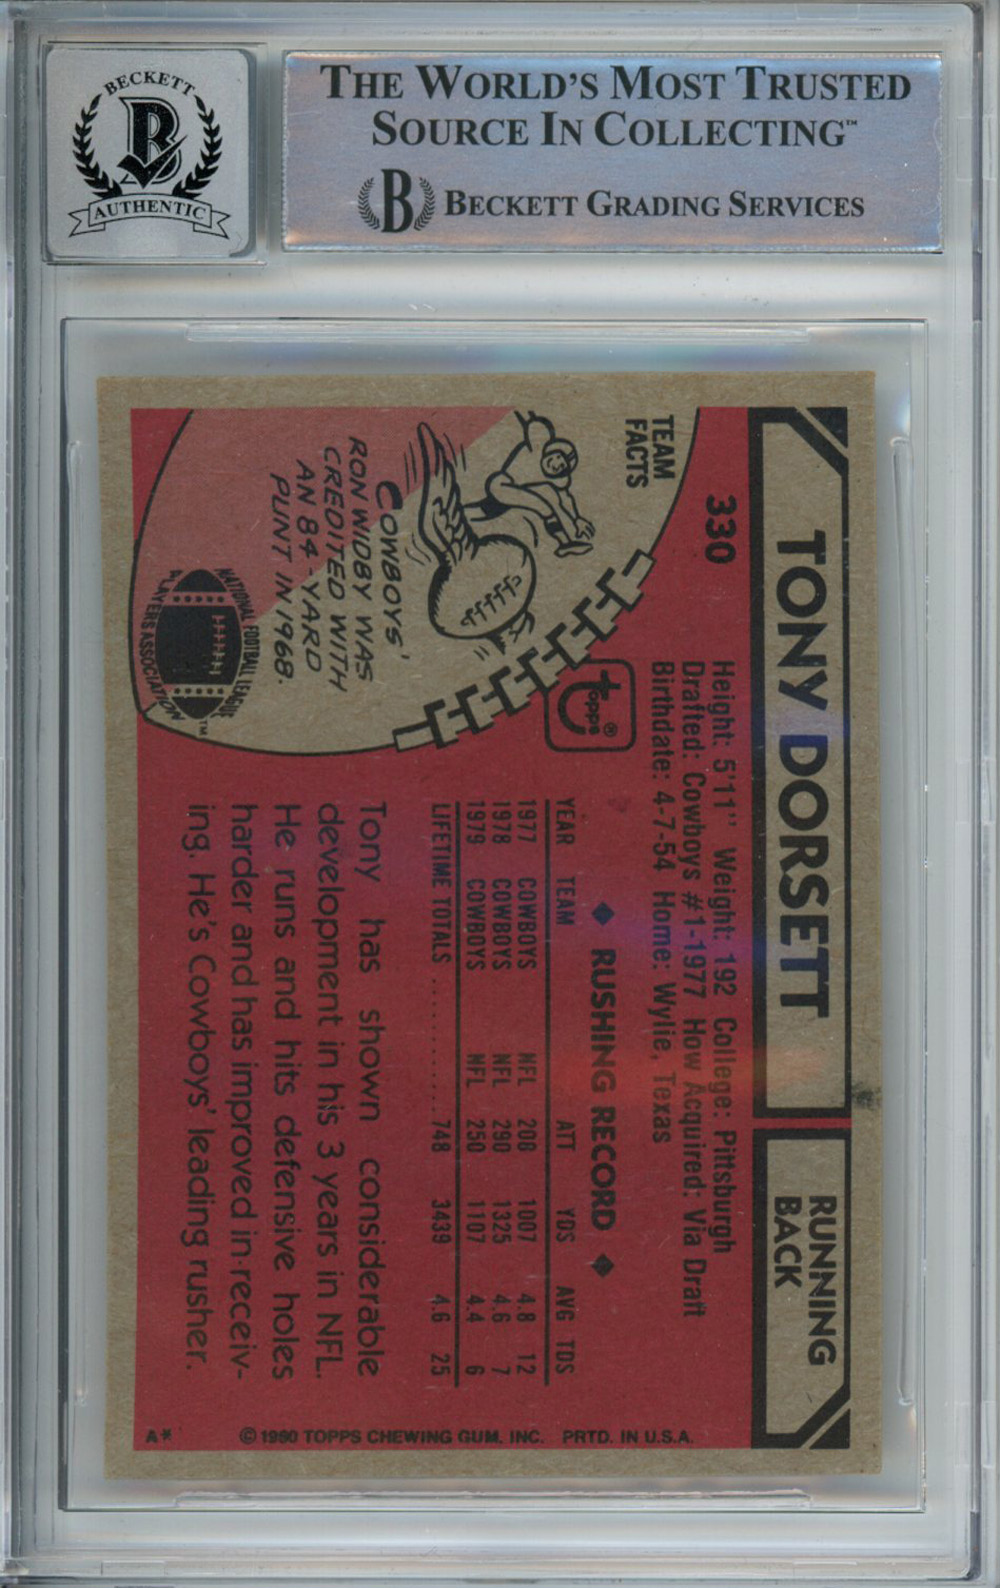 Tony Dorsett Autographed 1980 Topps #330 Trading Card Beckett Slab